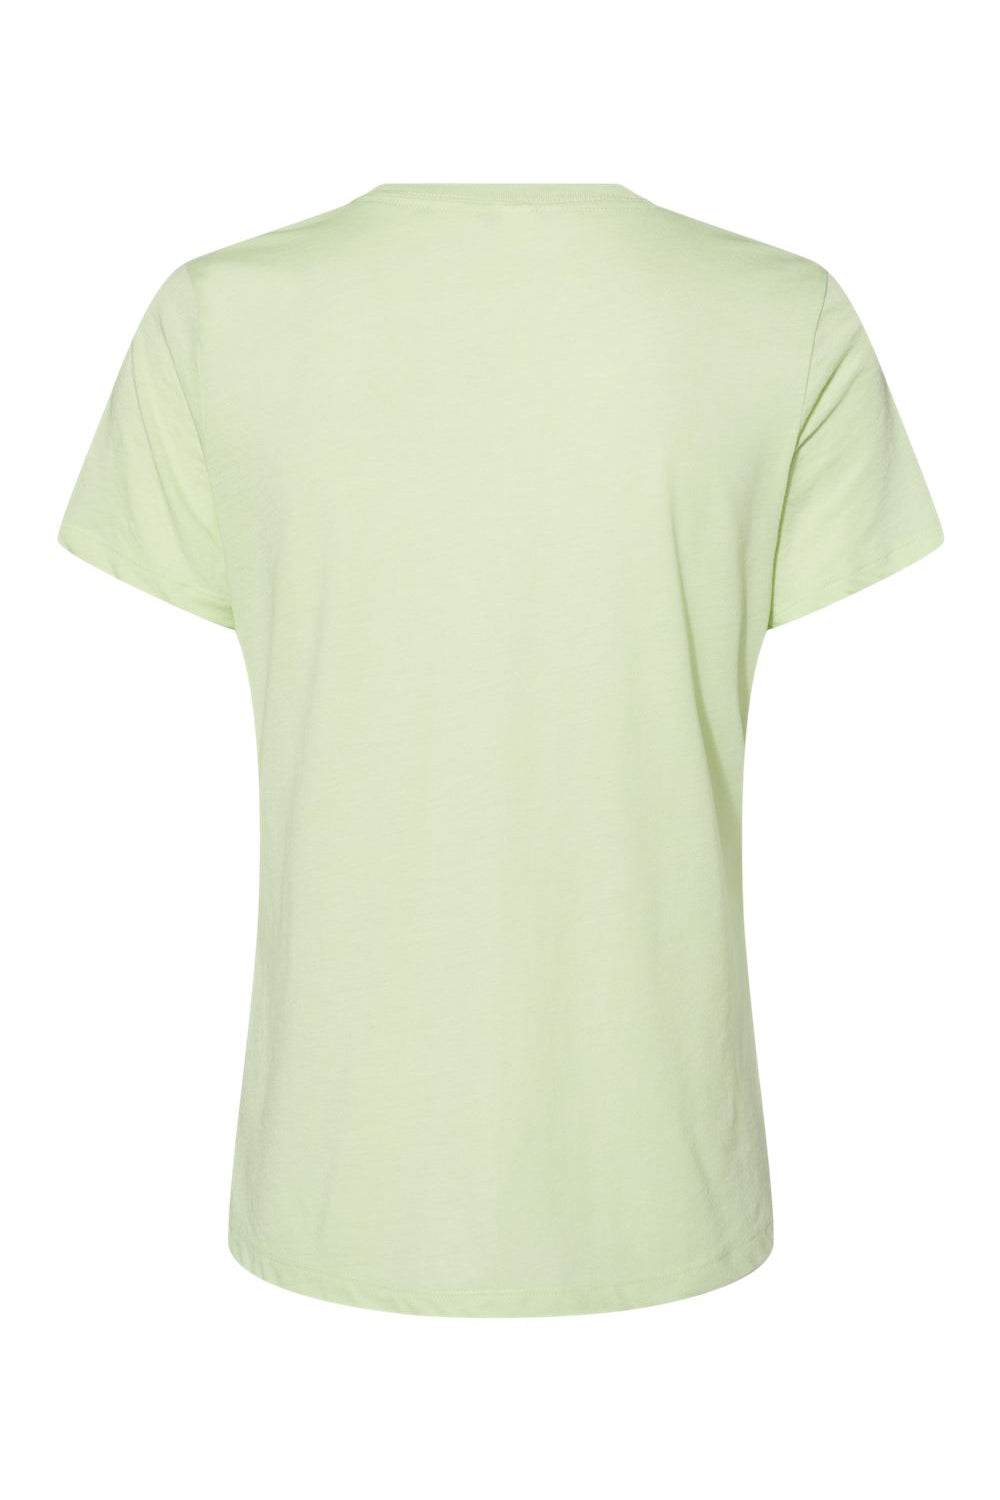 Bella + Canvas BC6413 Womens Short Sleeve Crewneck T-Shirt Spring Green Flat Back